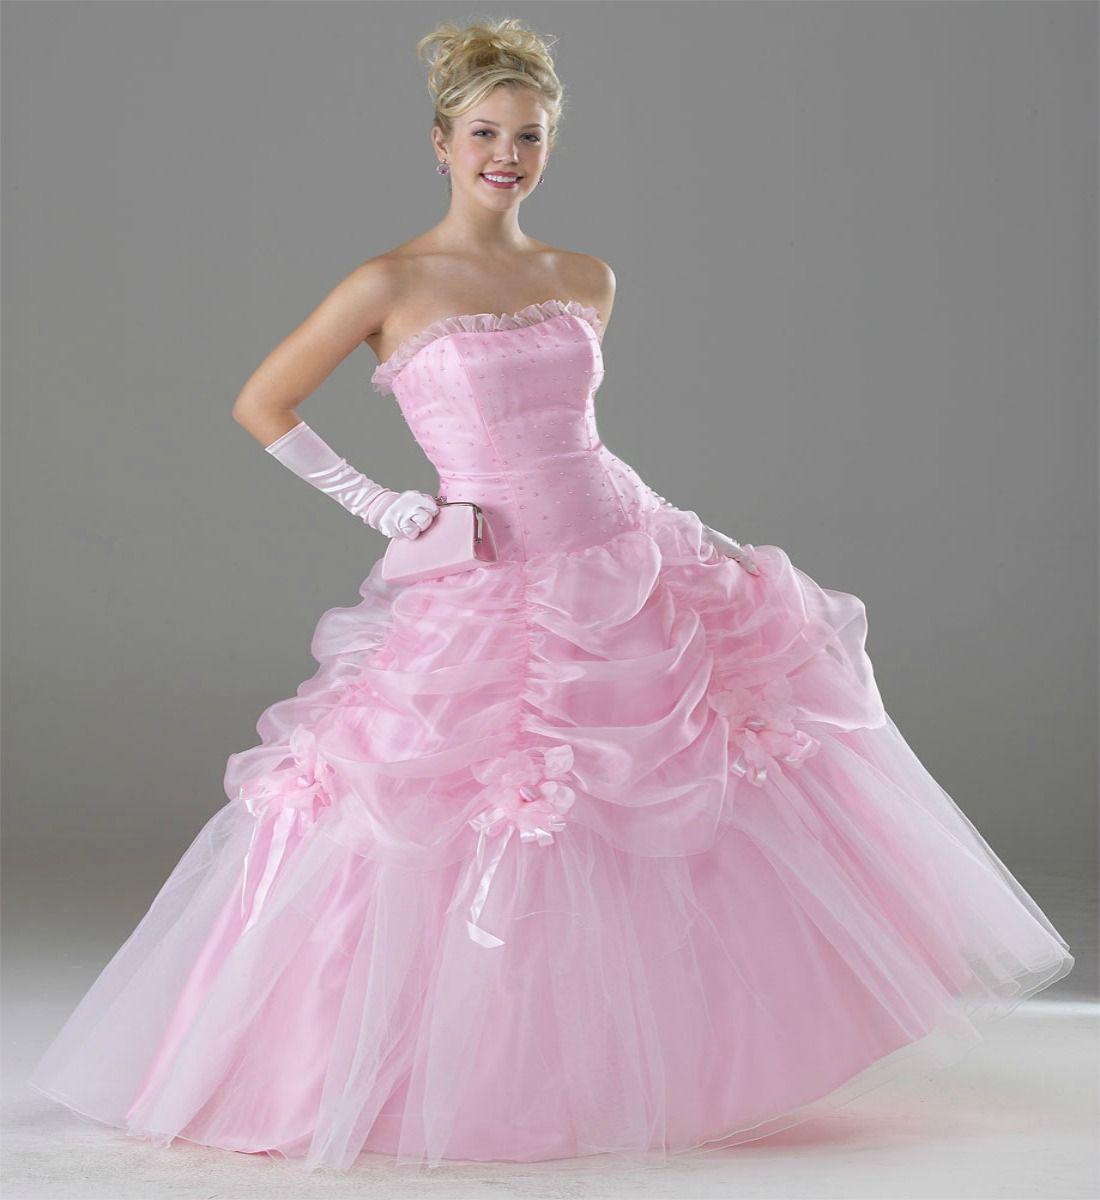 Pink Bridal Dress Wallpaper 1100x1200. Download wallpaper page